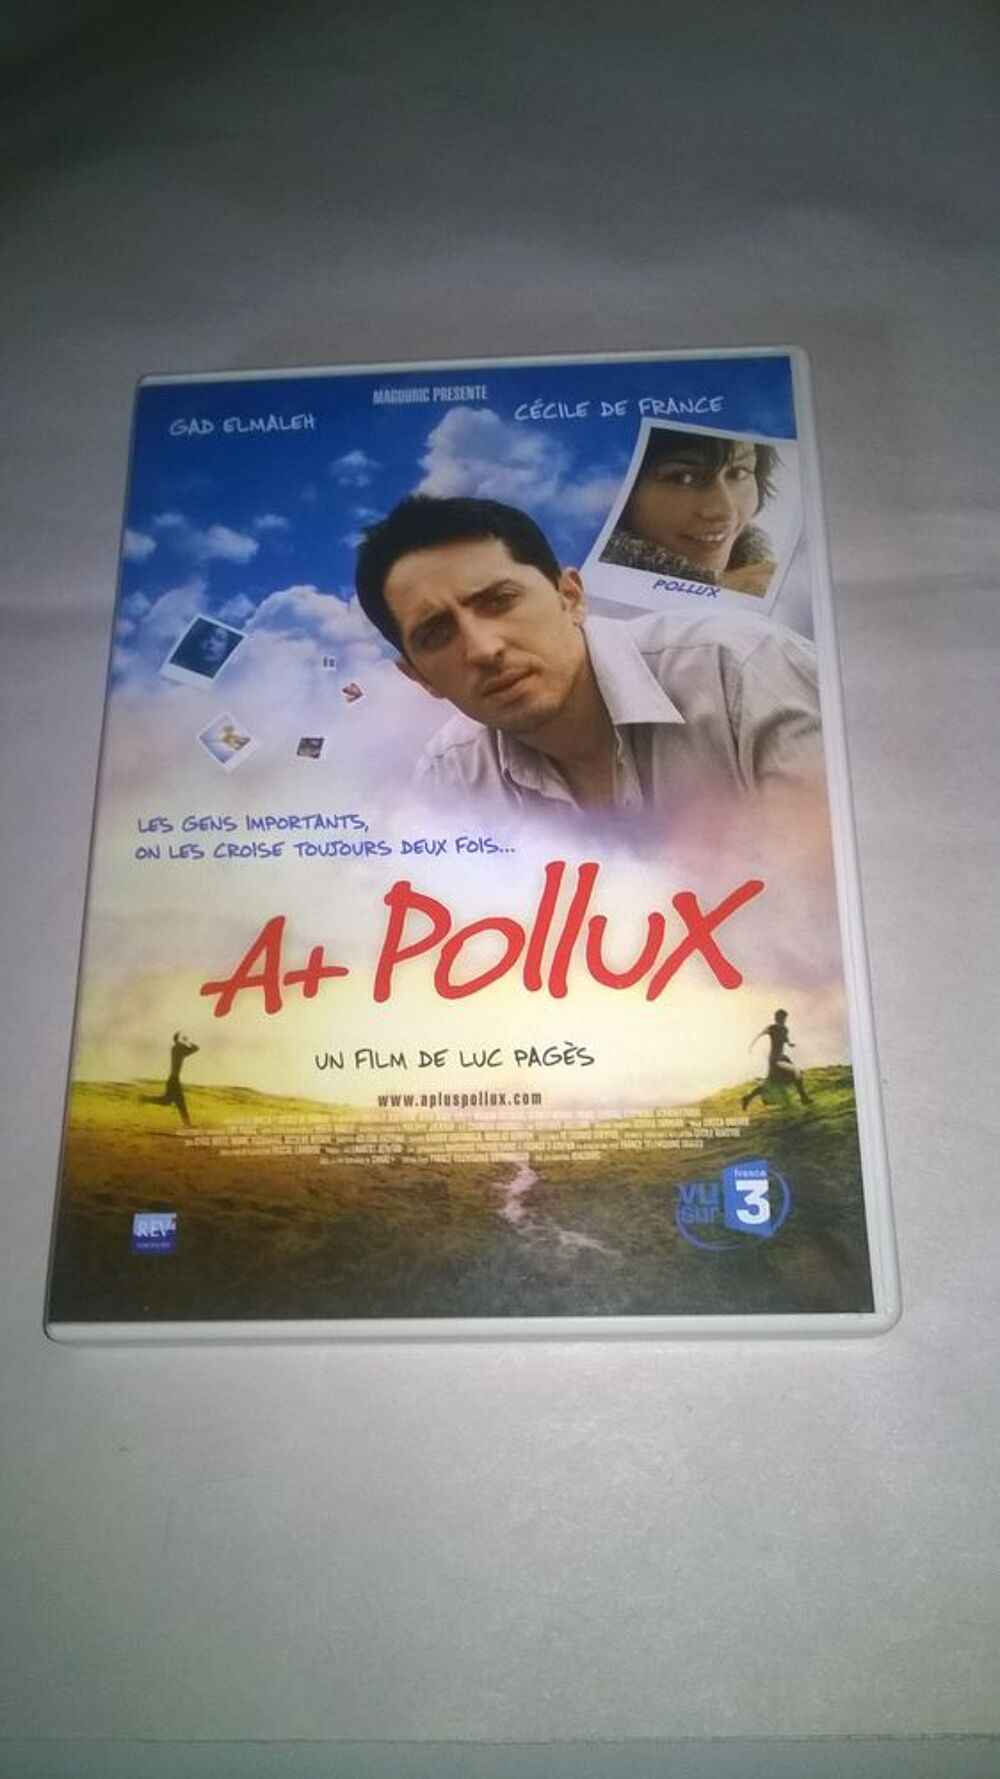 DVD A+ Pollux
Gad Elmaleh - C&eacute;cile De France 
2003
Excell DVD et blu-ray